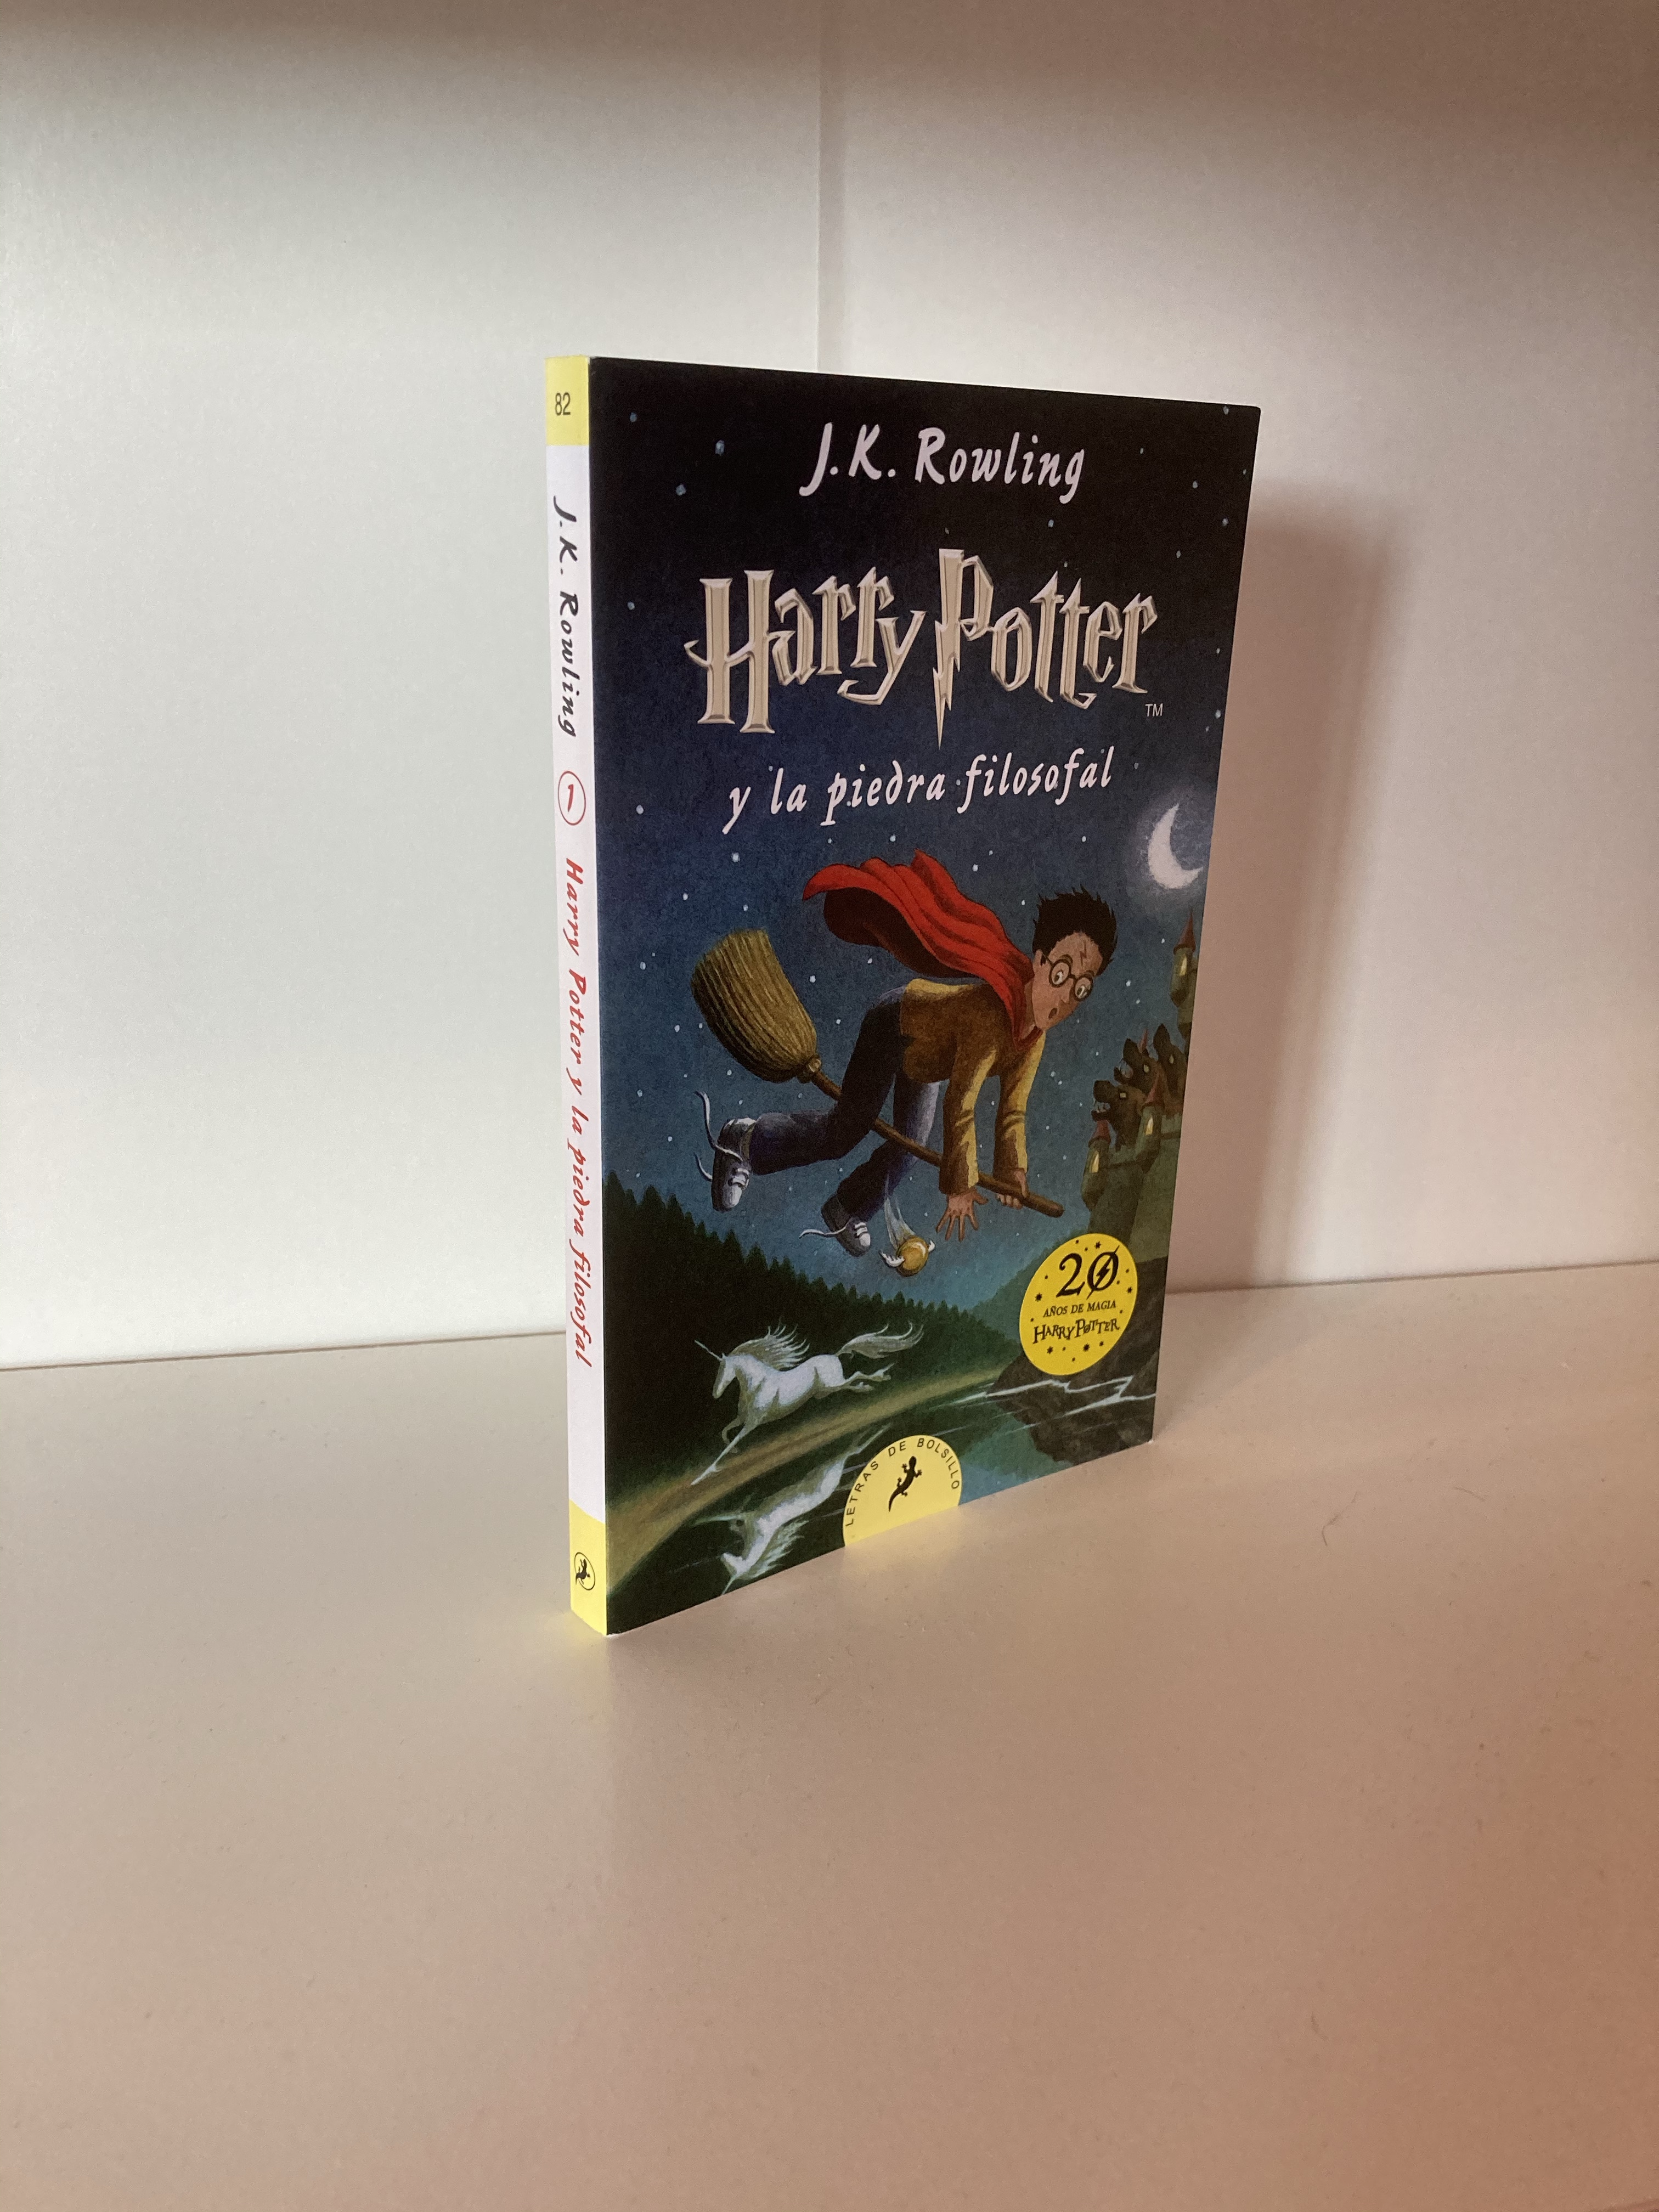 The cover of Harry Potter y la Piedra Filosofal by JK Rowling